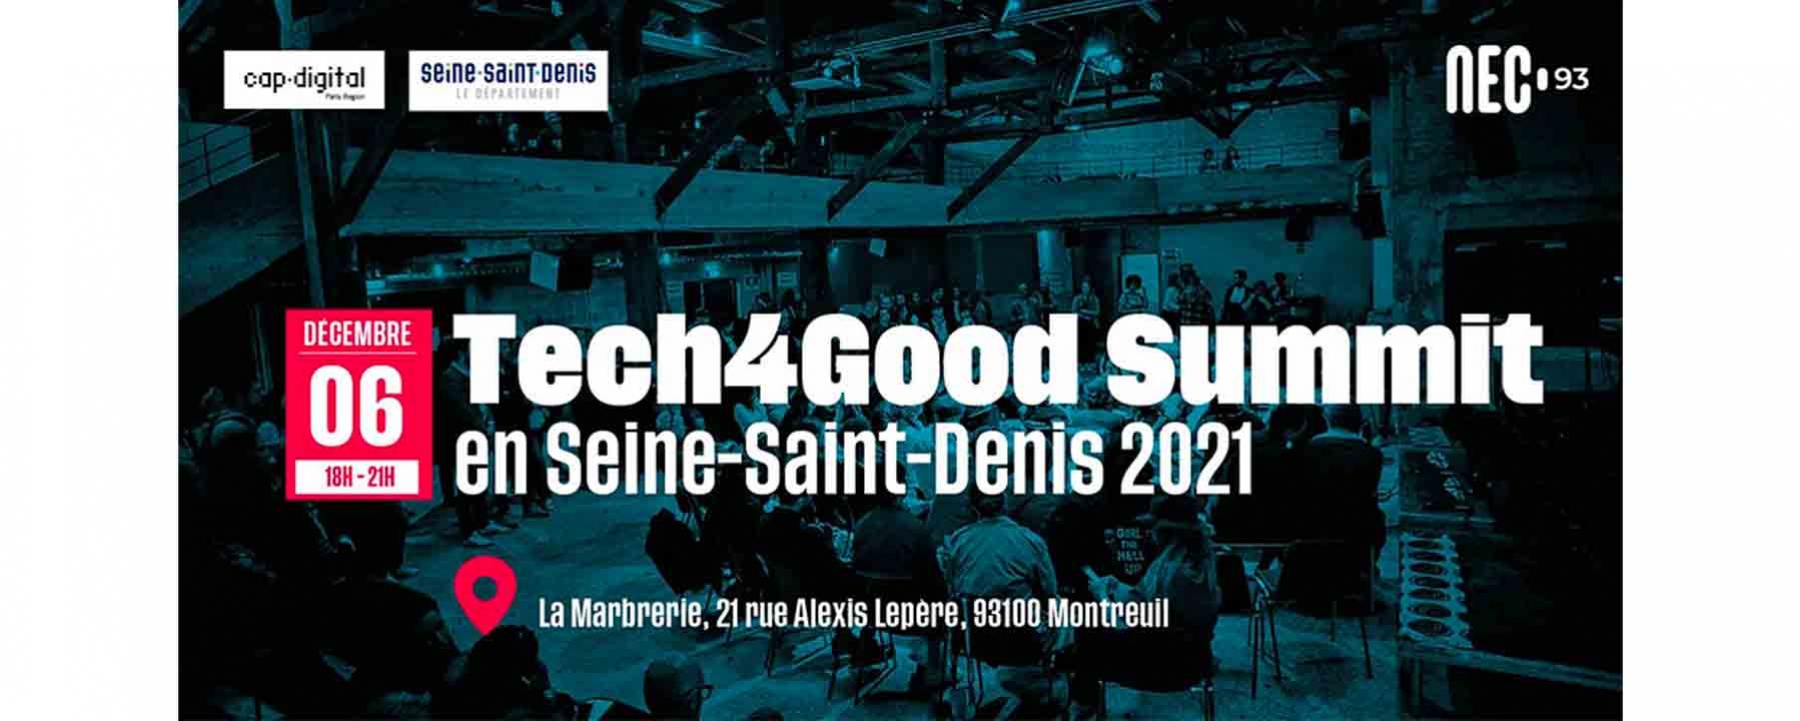 Tech4good Summit 2021